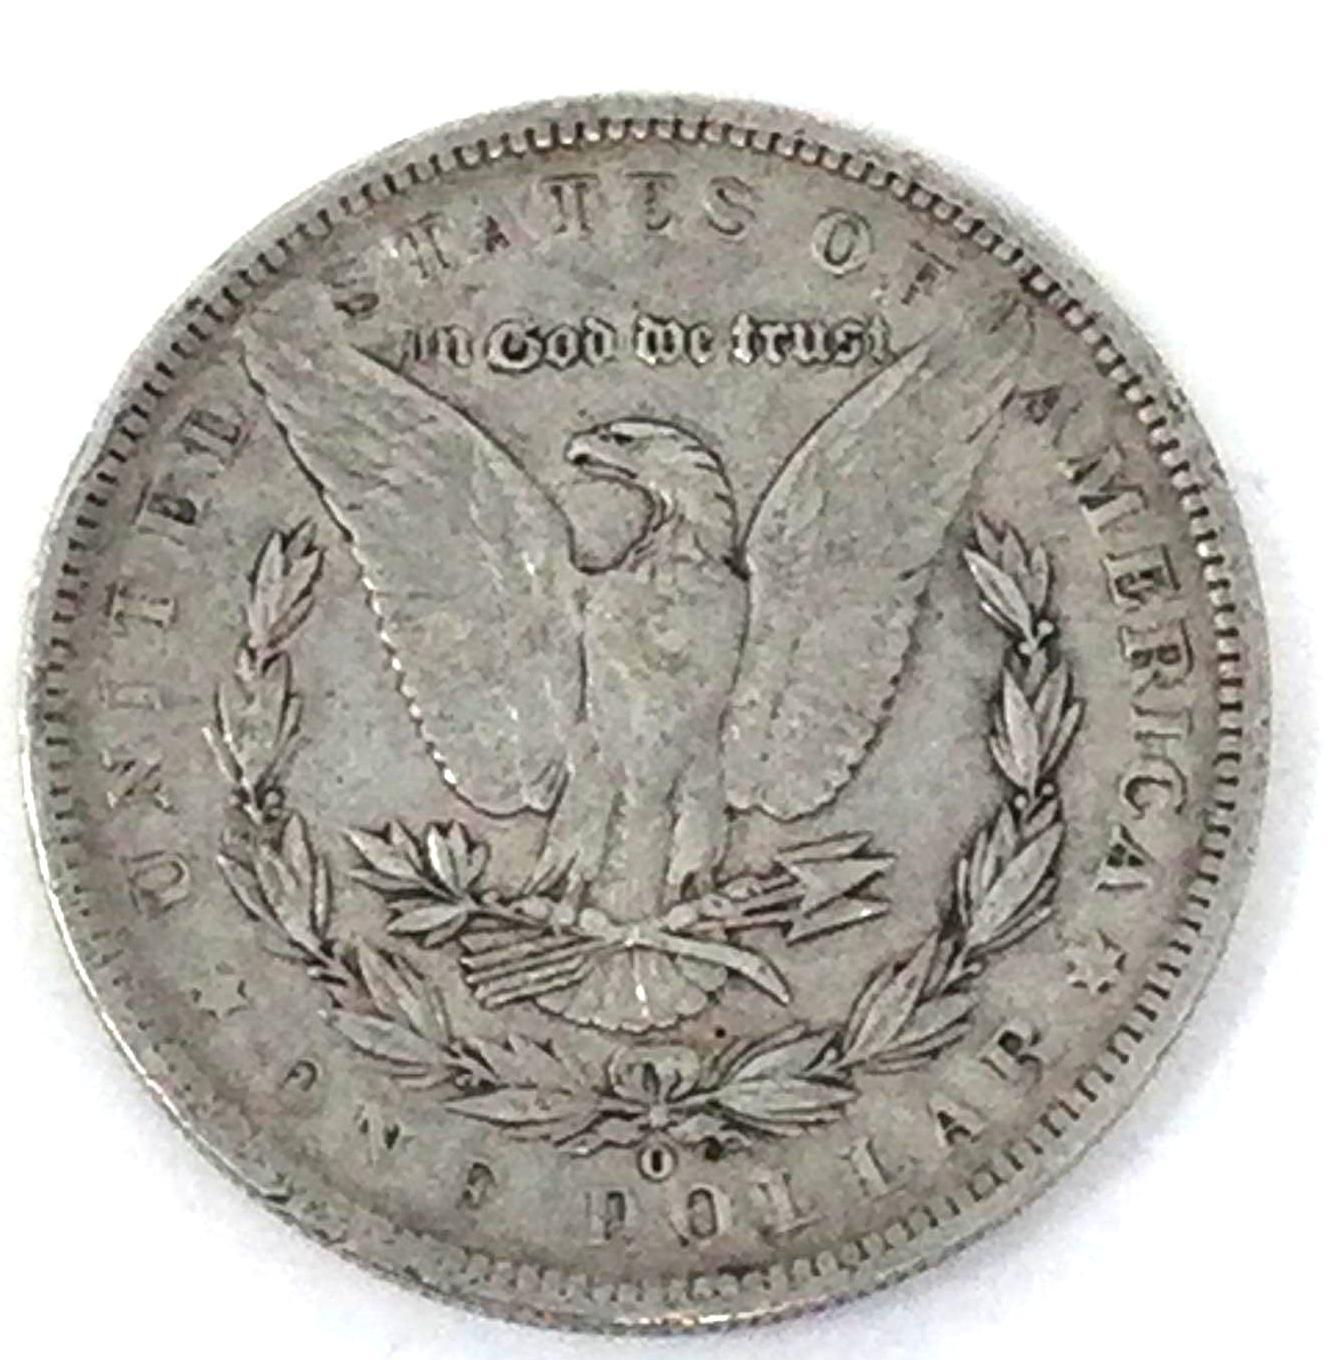 1889 Morgan Silver Dollars (3)